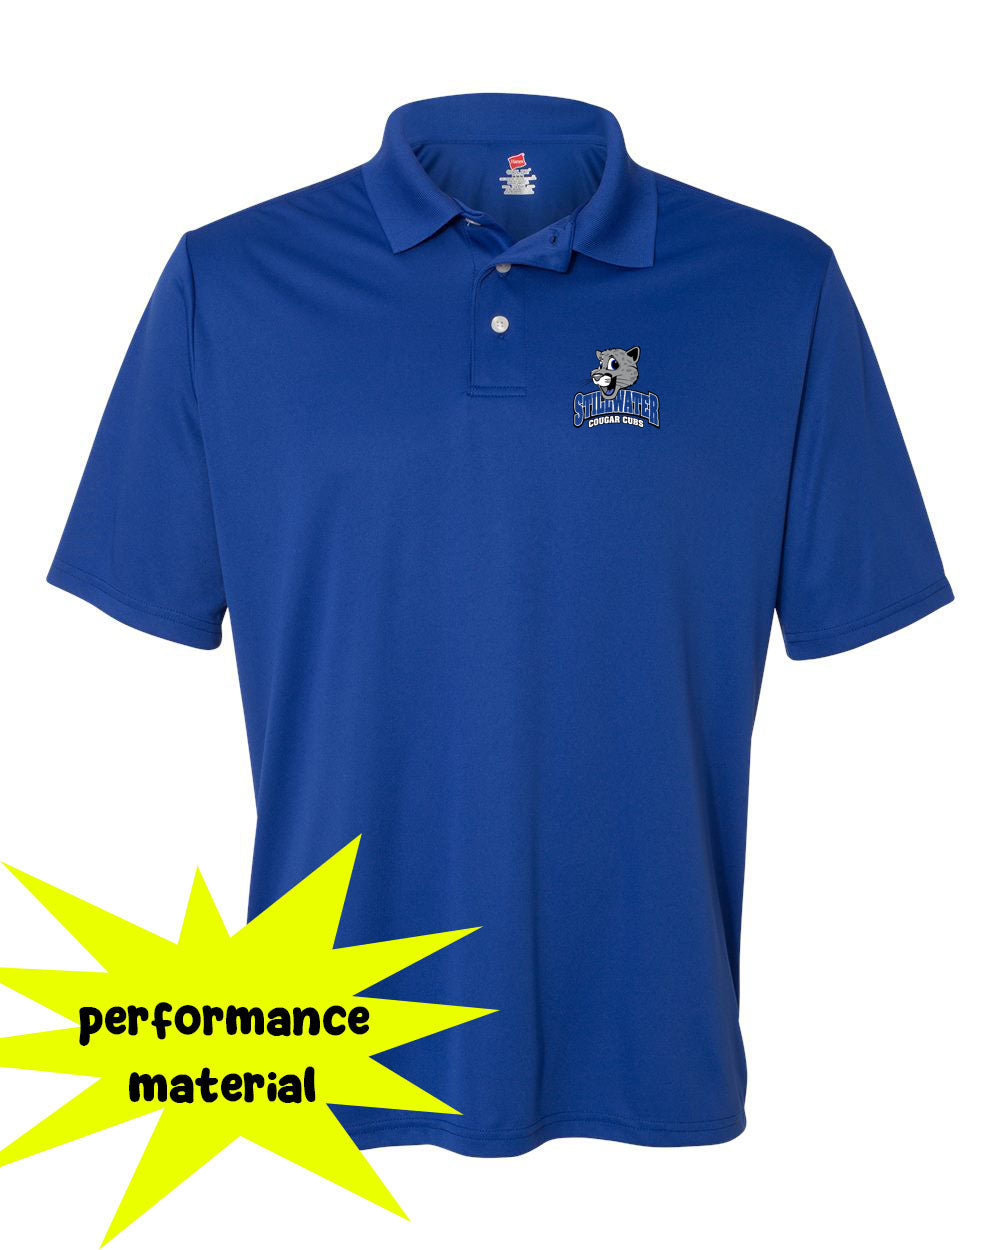 Stillwater Performance Material Polo T-Shirt Design 22